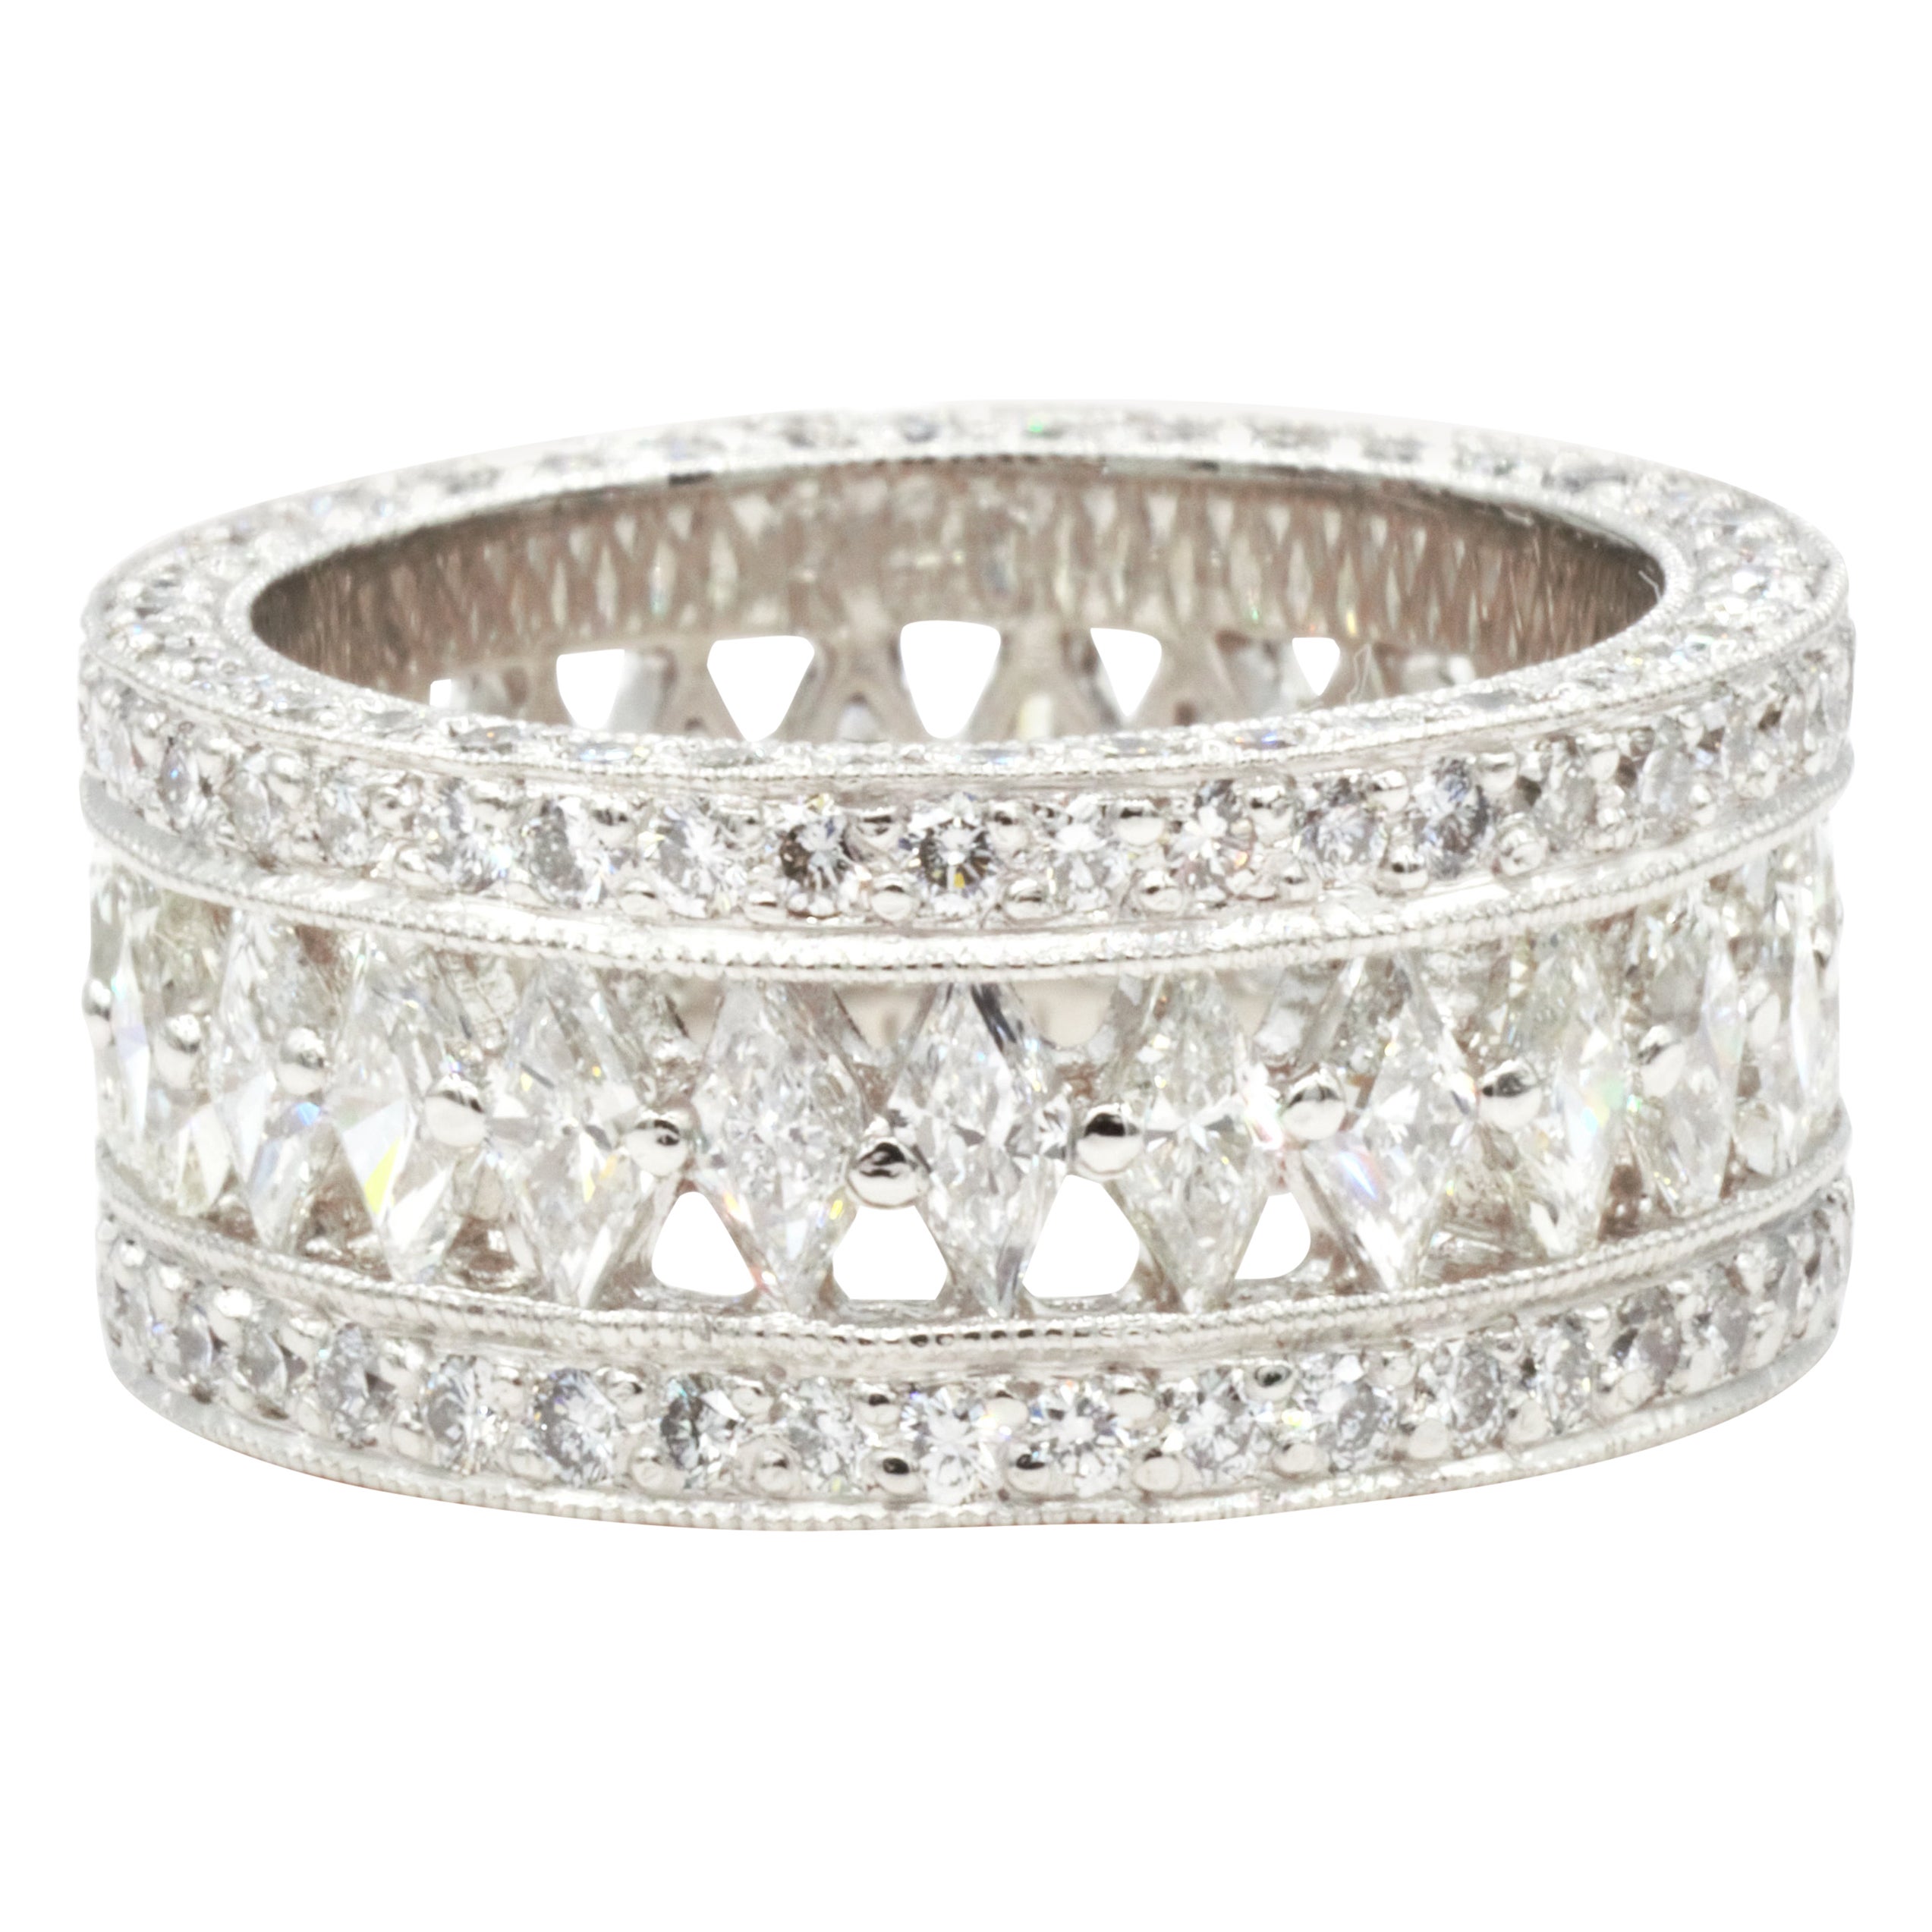 Platinum Diamond Eternity Ring 4.80cttw, Sz 6, Designer RGC, F/VS2, Stunning For Sale